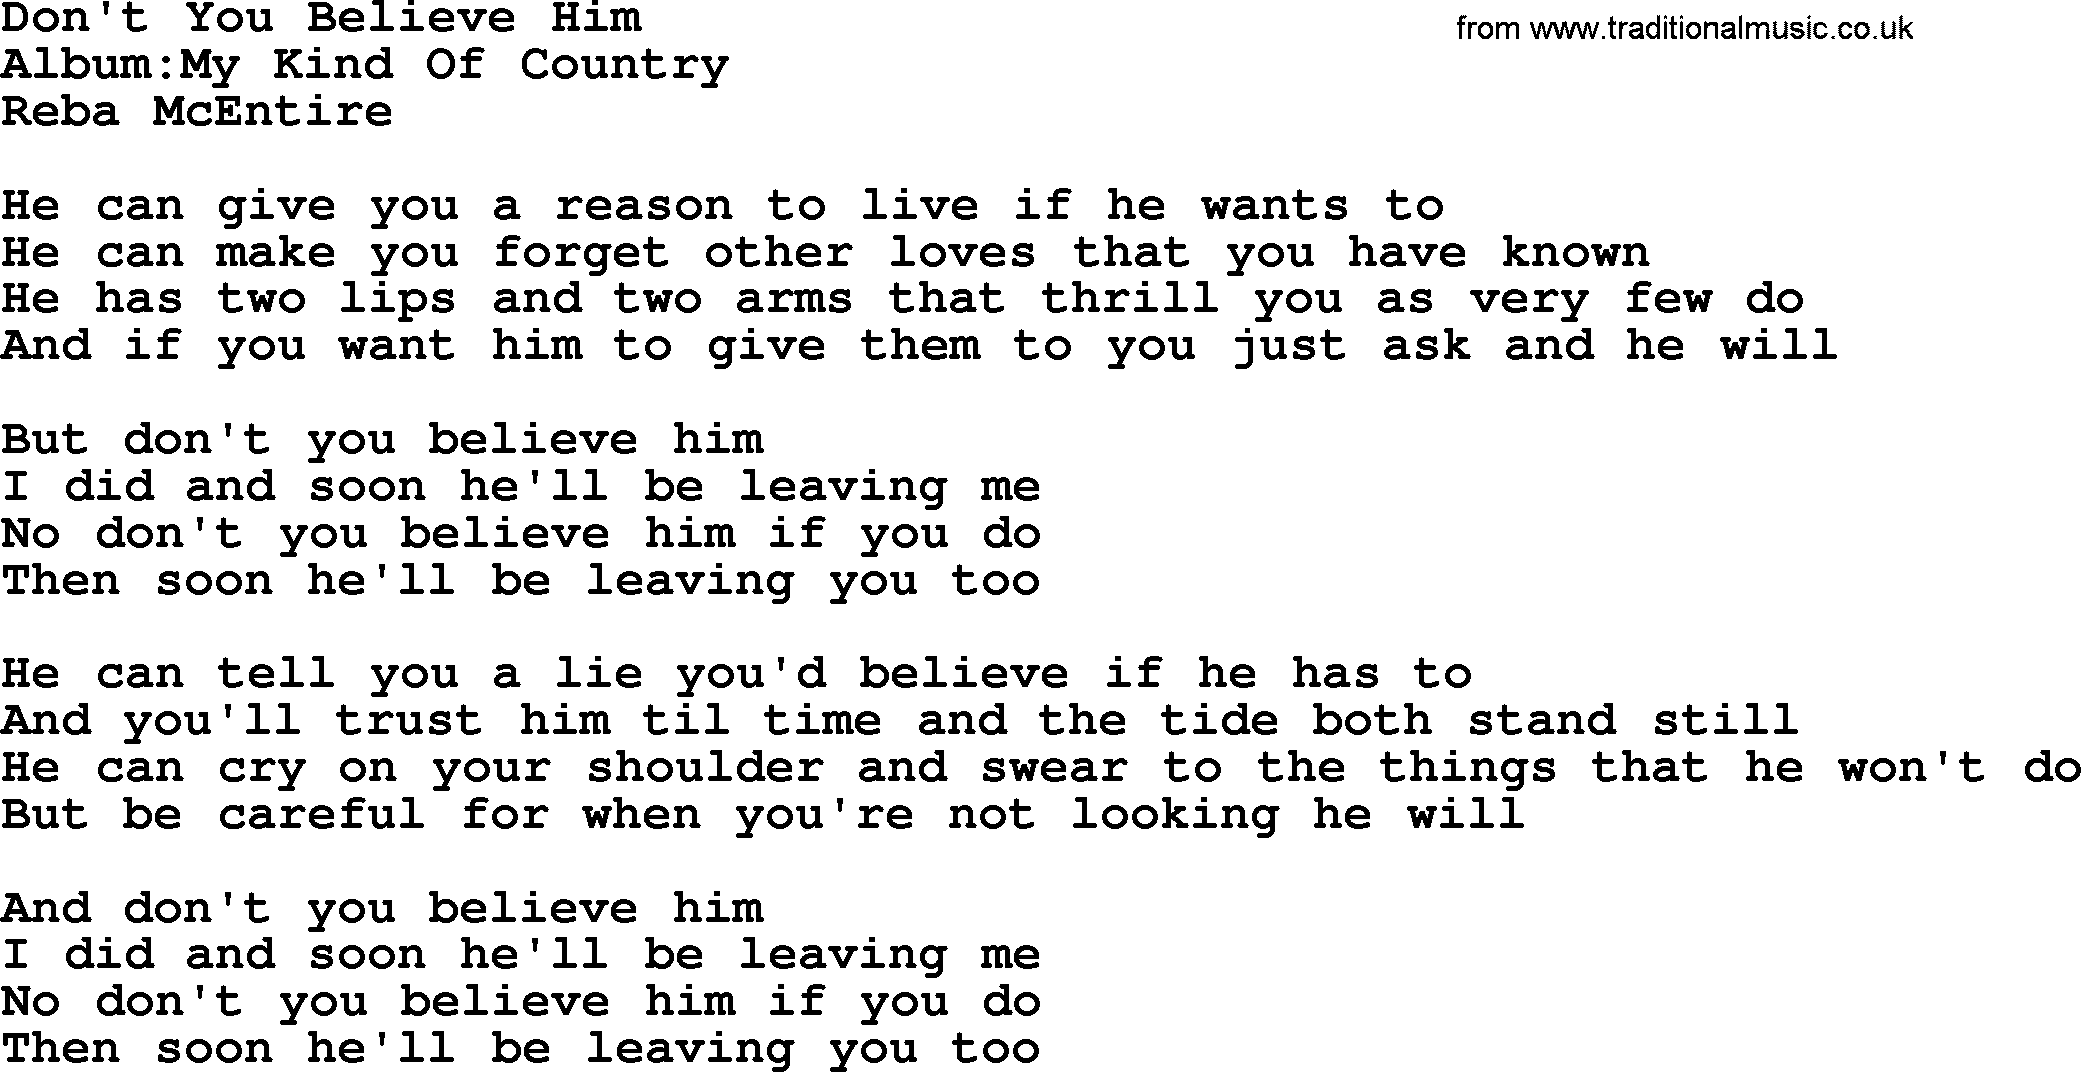 Reba McEntire song: Don't You Believe Him lyrics